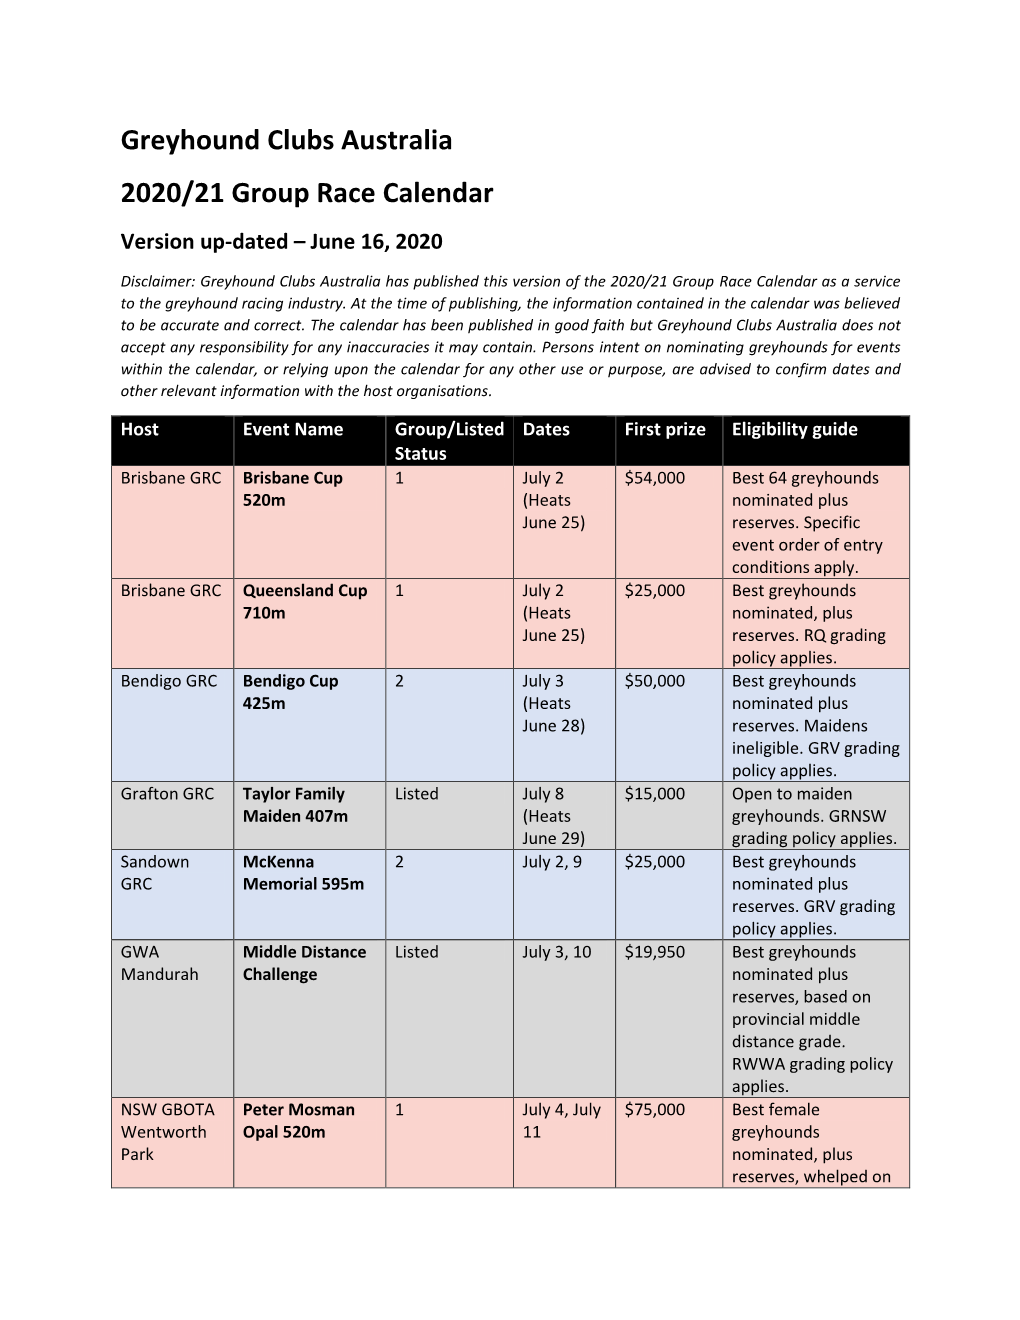 Greyhound Clubs Australia 2020/21 Group Race Calendar Version Up-Dated – June 16, 2020